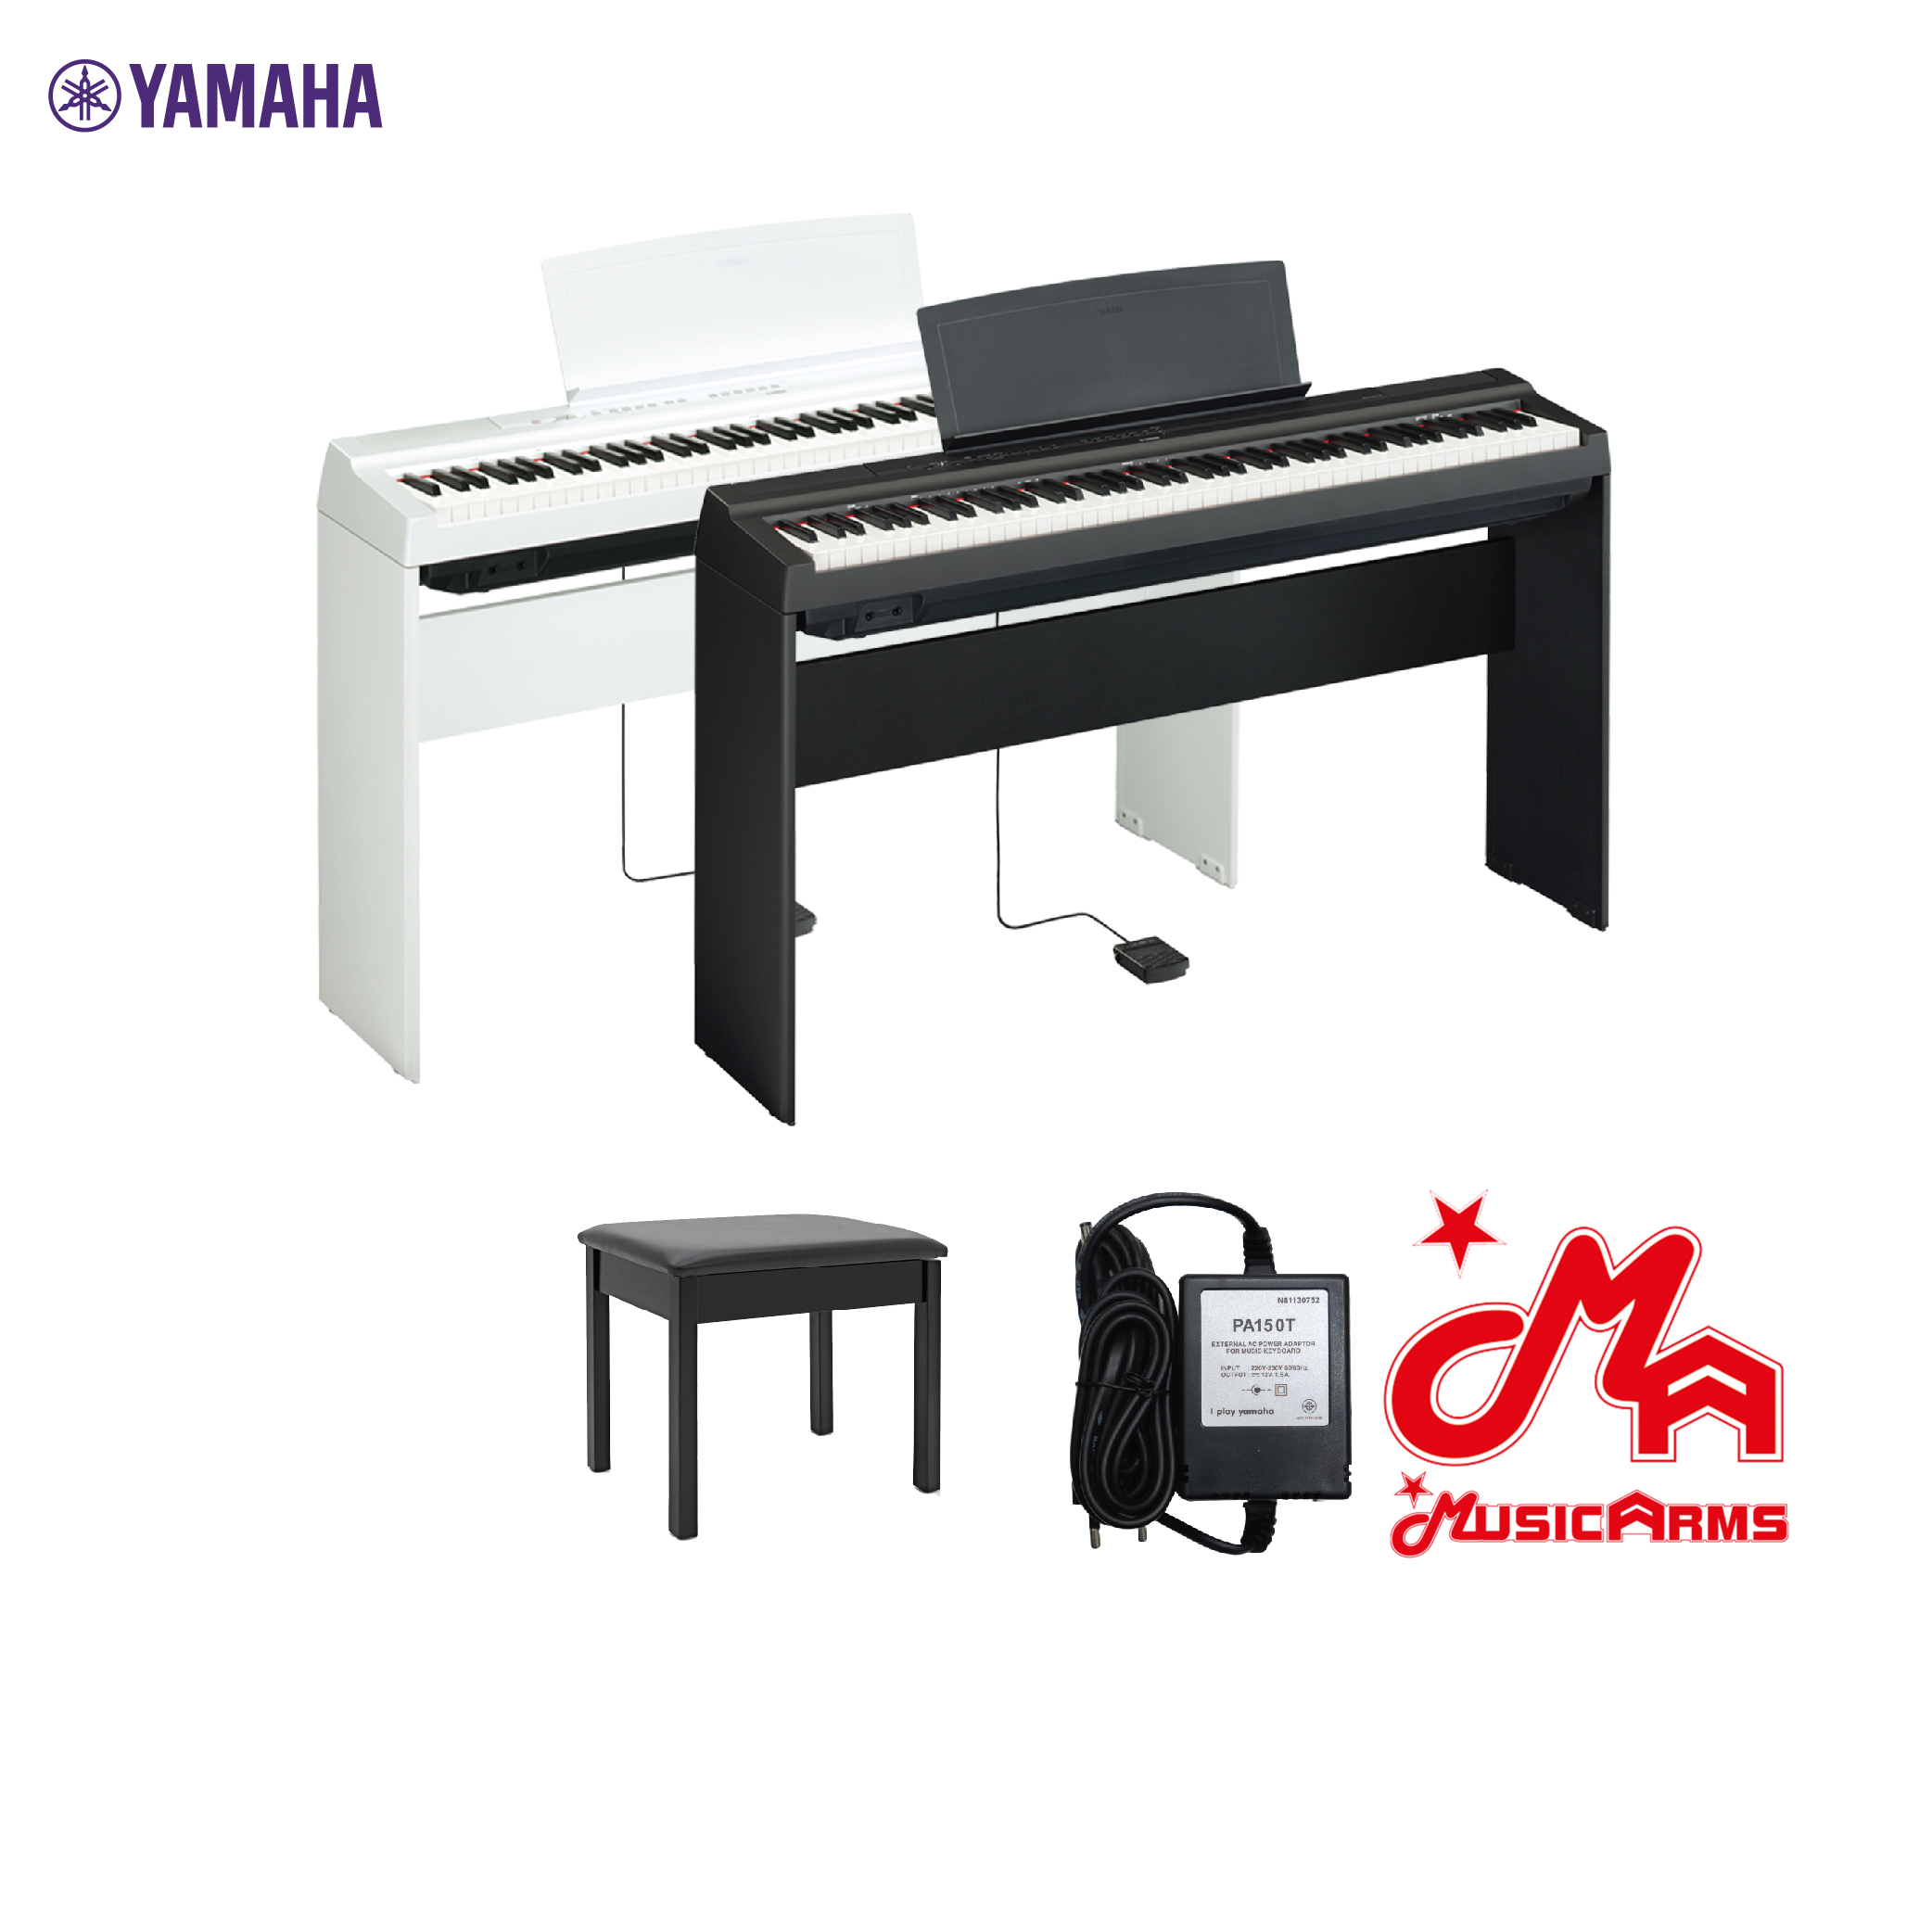 YAMAHA P-125 B Digital Piano + Stand เปียโนไฟฟ้ายามาฮ่า รุ่น P-125B พร้อมขาตั้ง